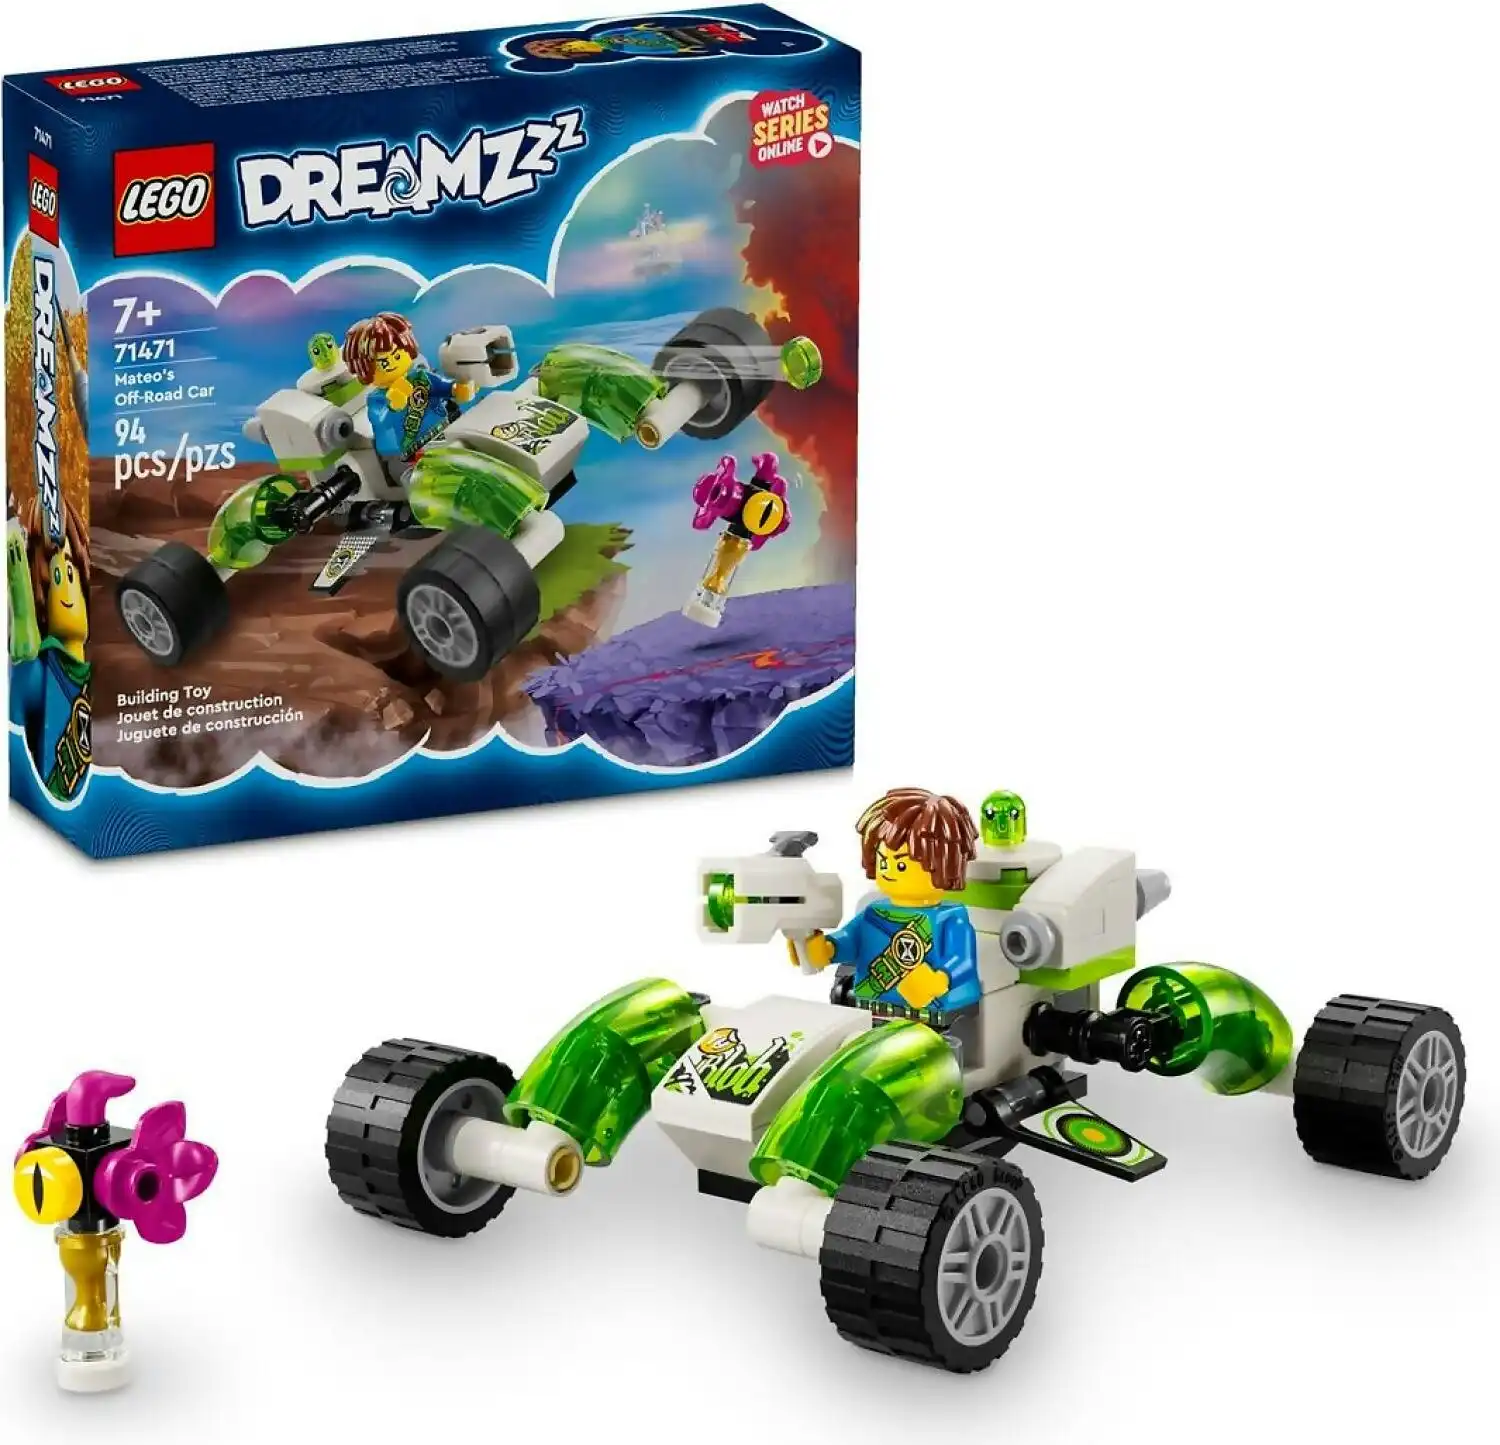 LEGO 71471 Mateo's Off-Road Car - DREAMZzz